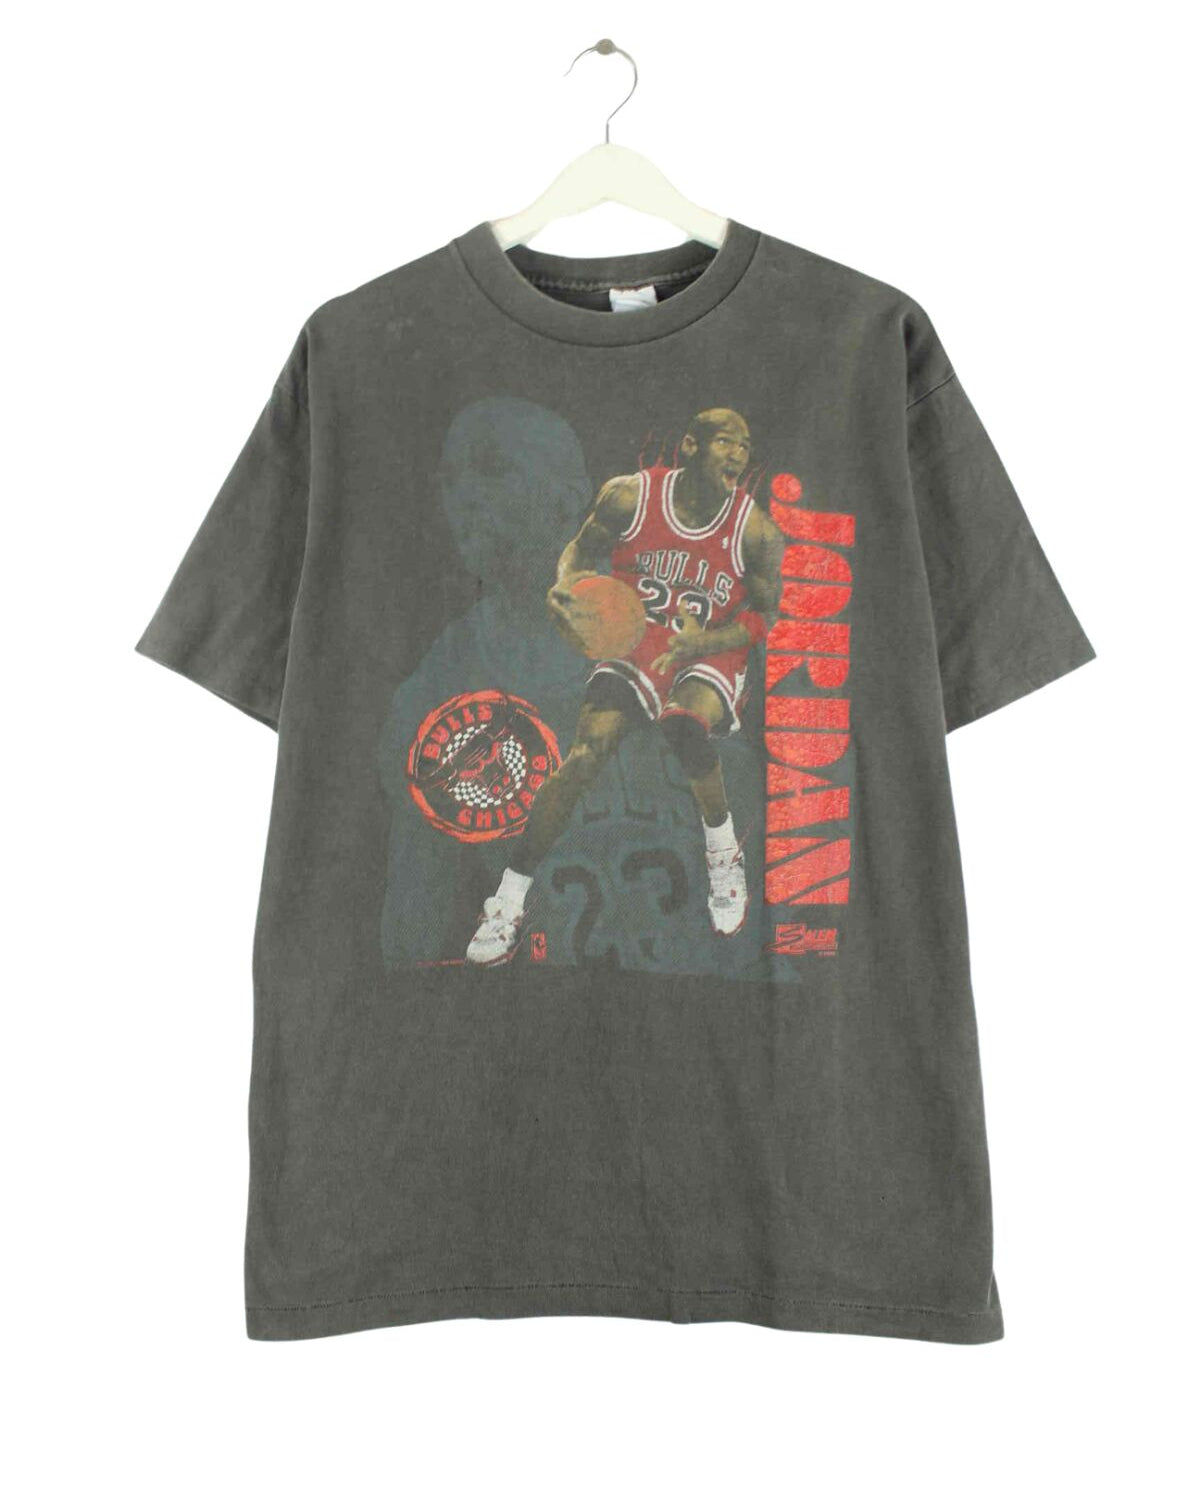 Salem Sportswear Vintage 1990 Michael Jordan Single Stitch T-Shirt Grau L (front image)